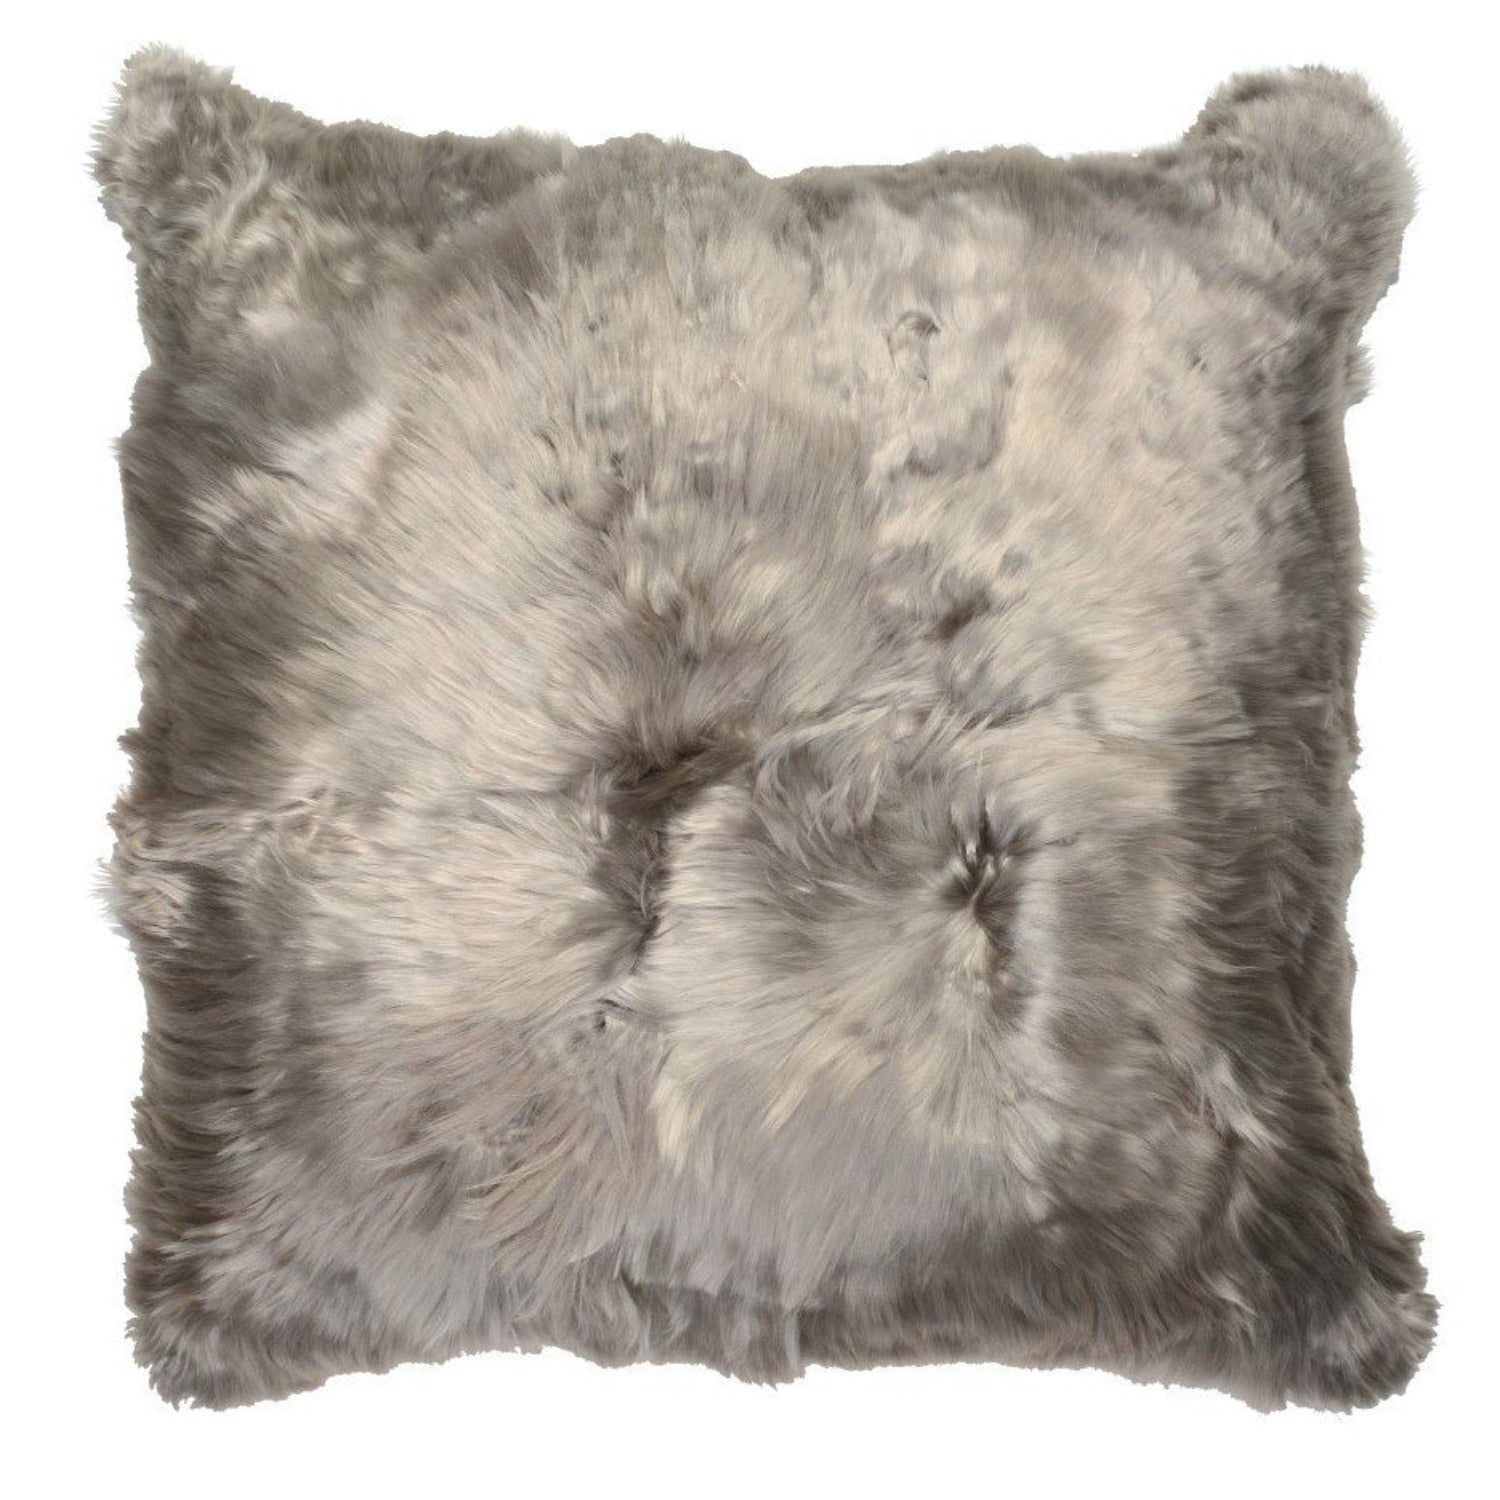 Suri Alpaca Fawn Pillow